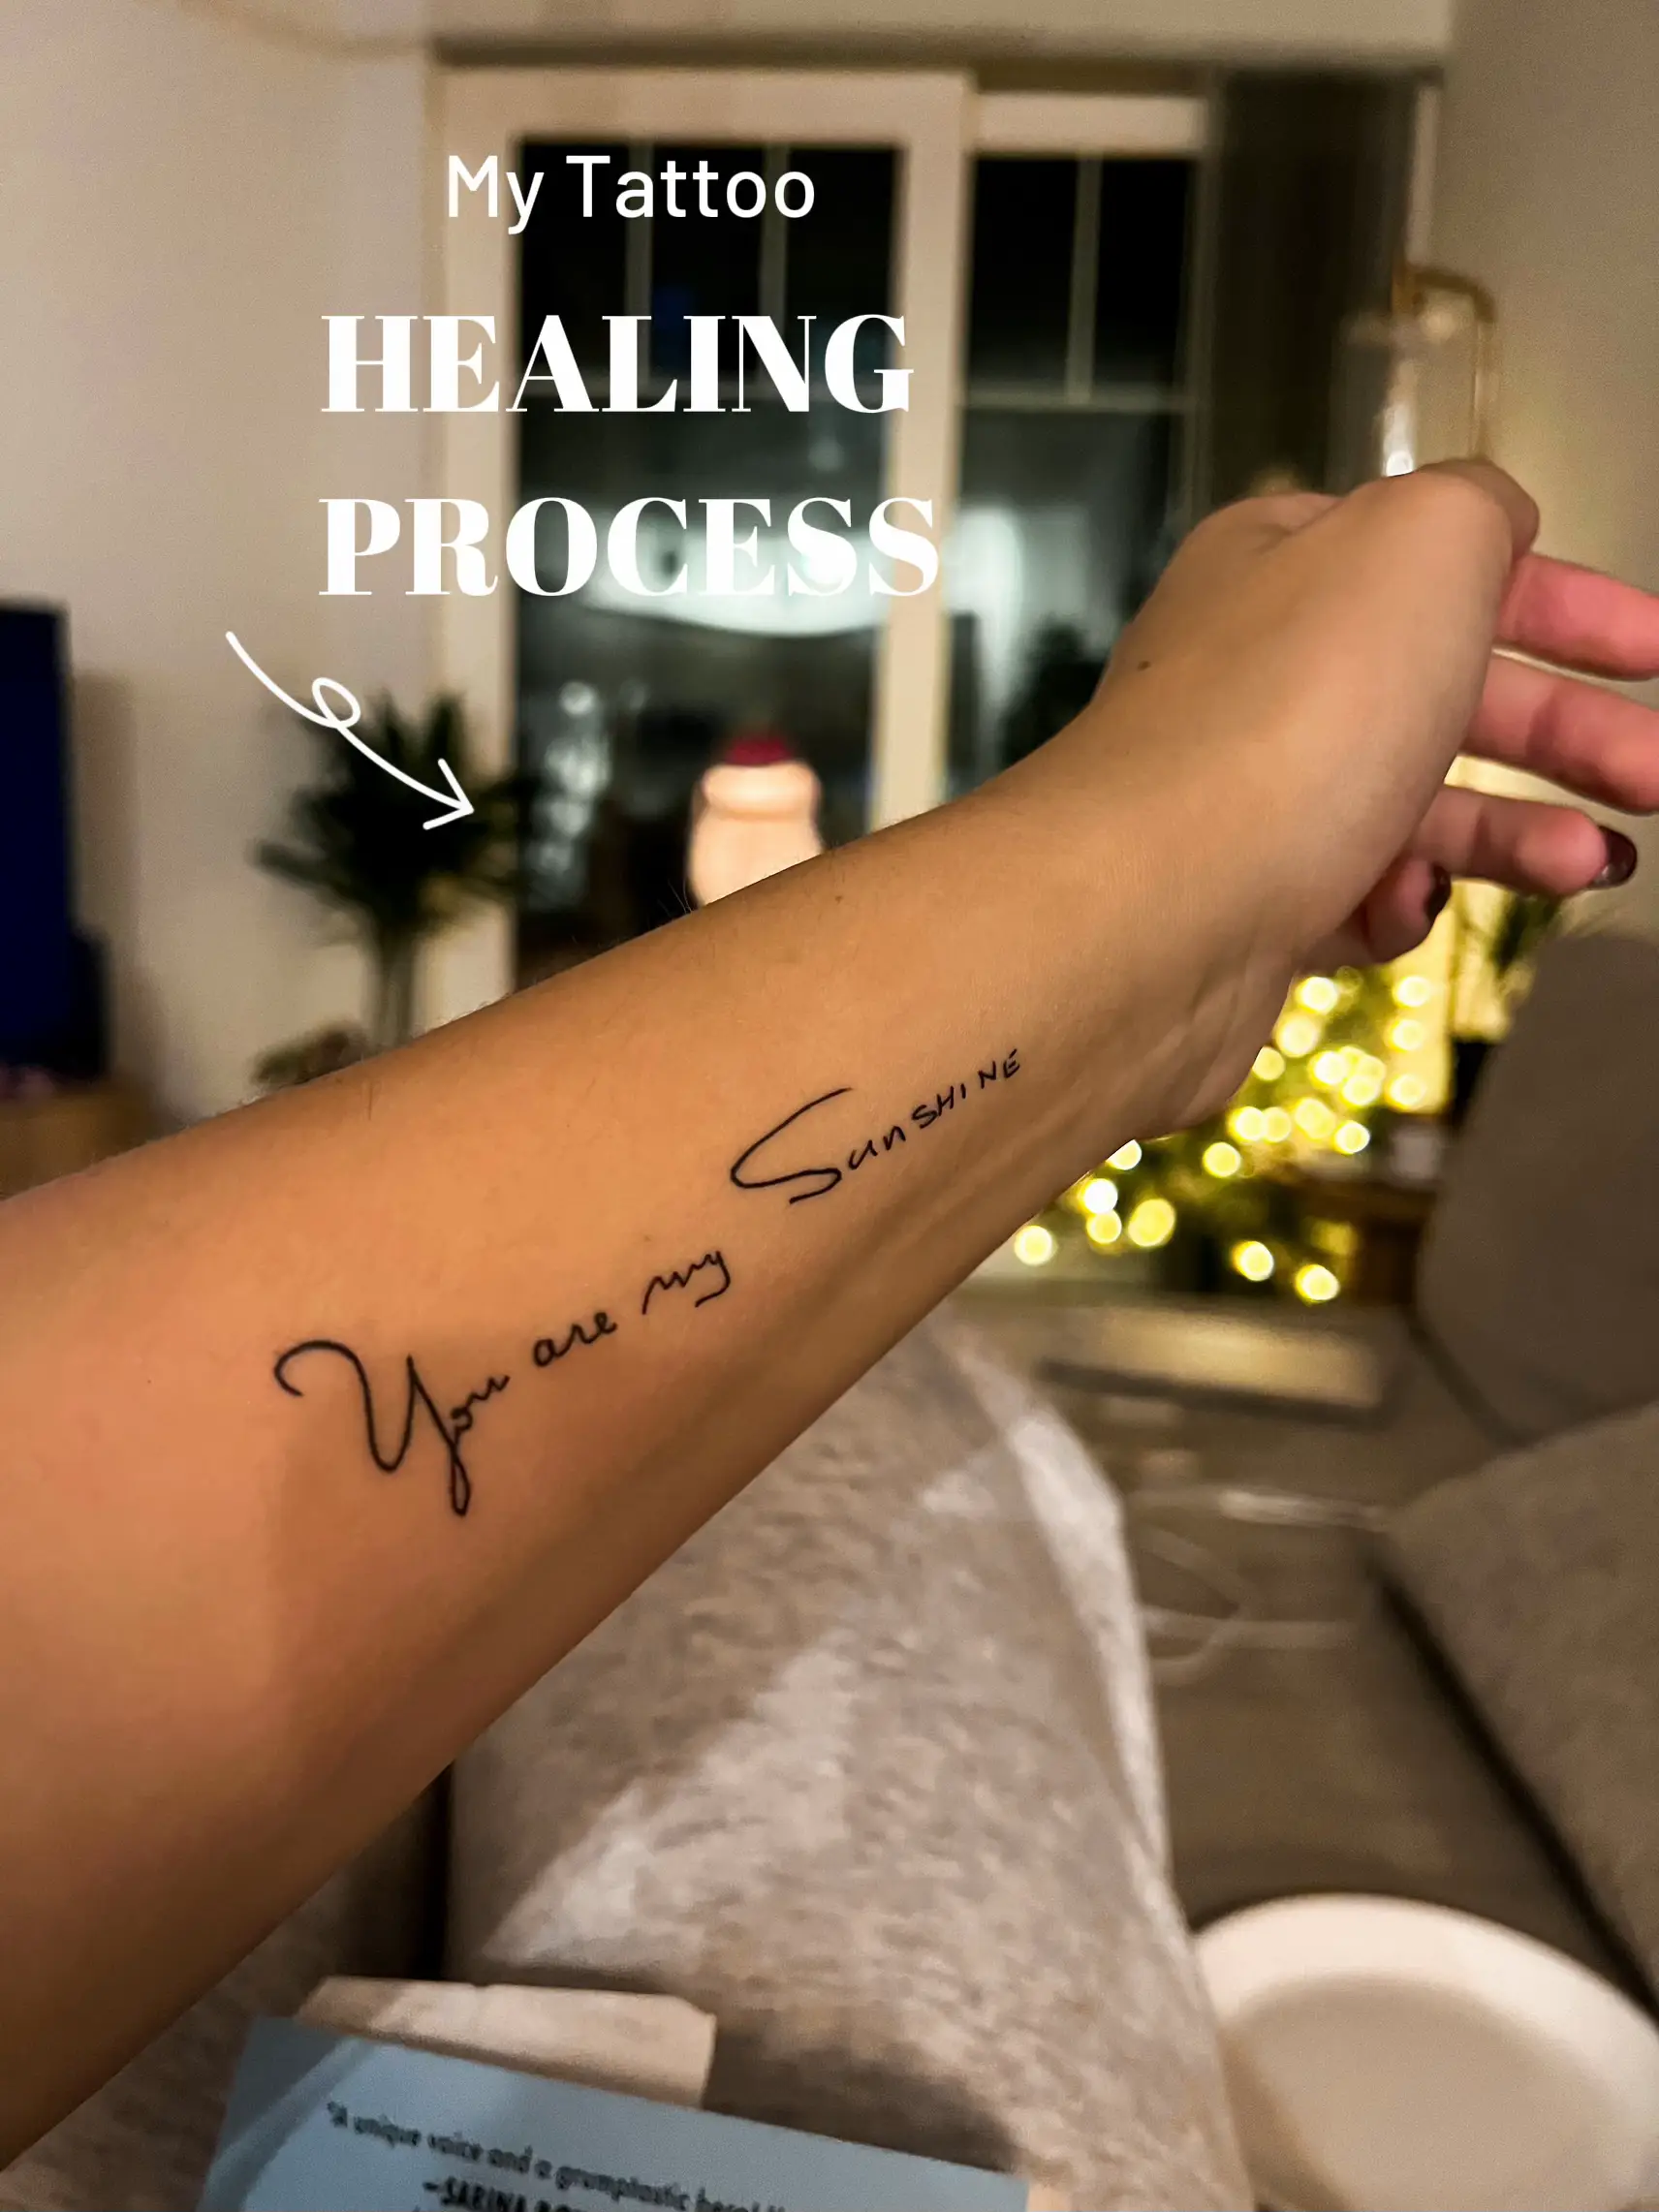 Tattoo Ideas For Cancer Survivors